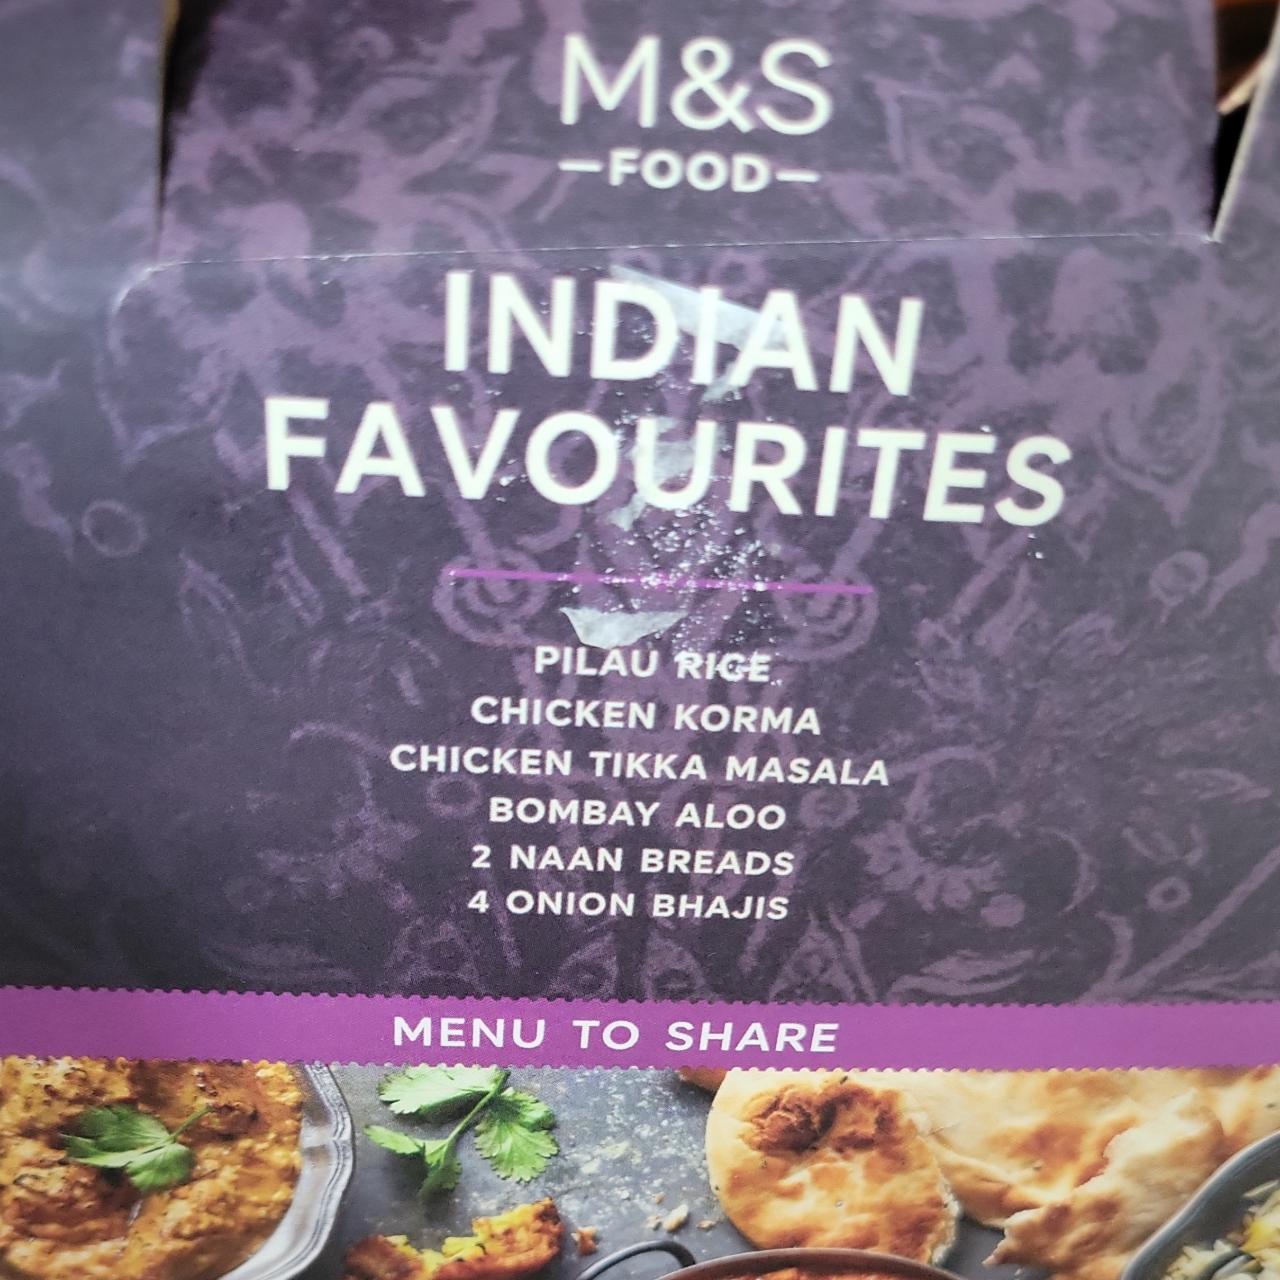 Fotografie - Saffron pilau rice menu to share M&S Food